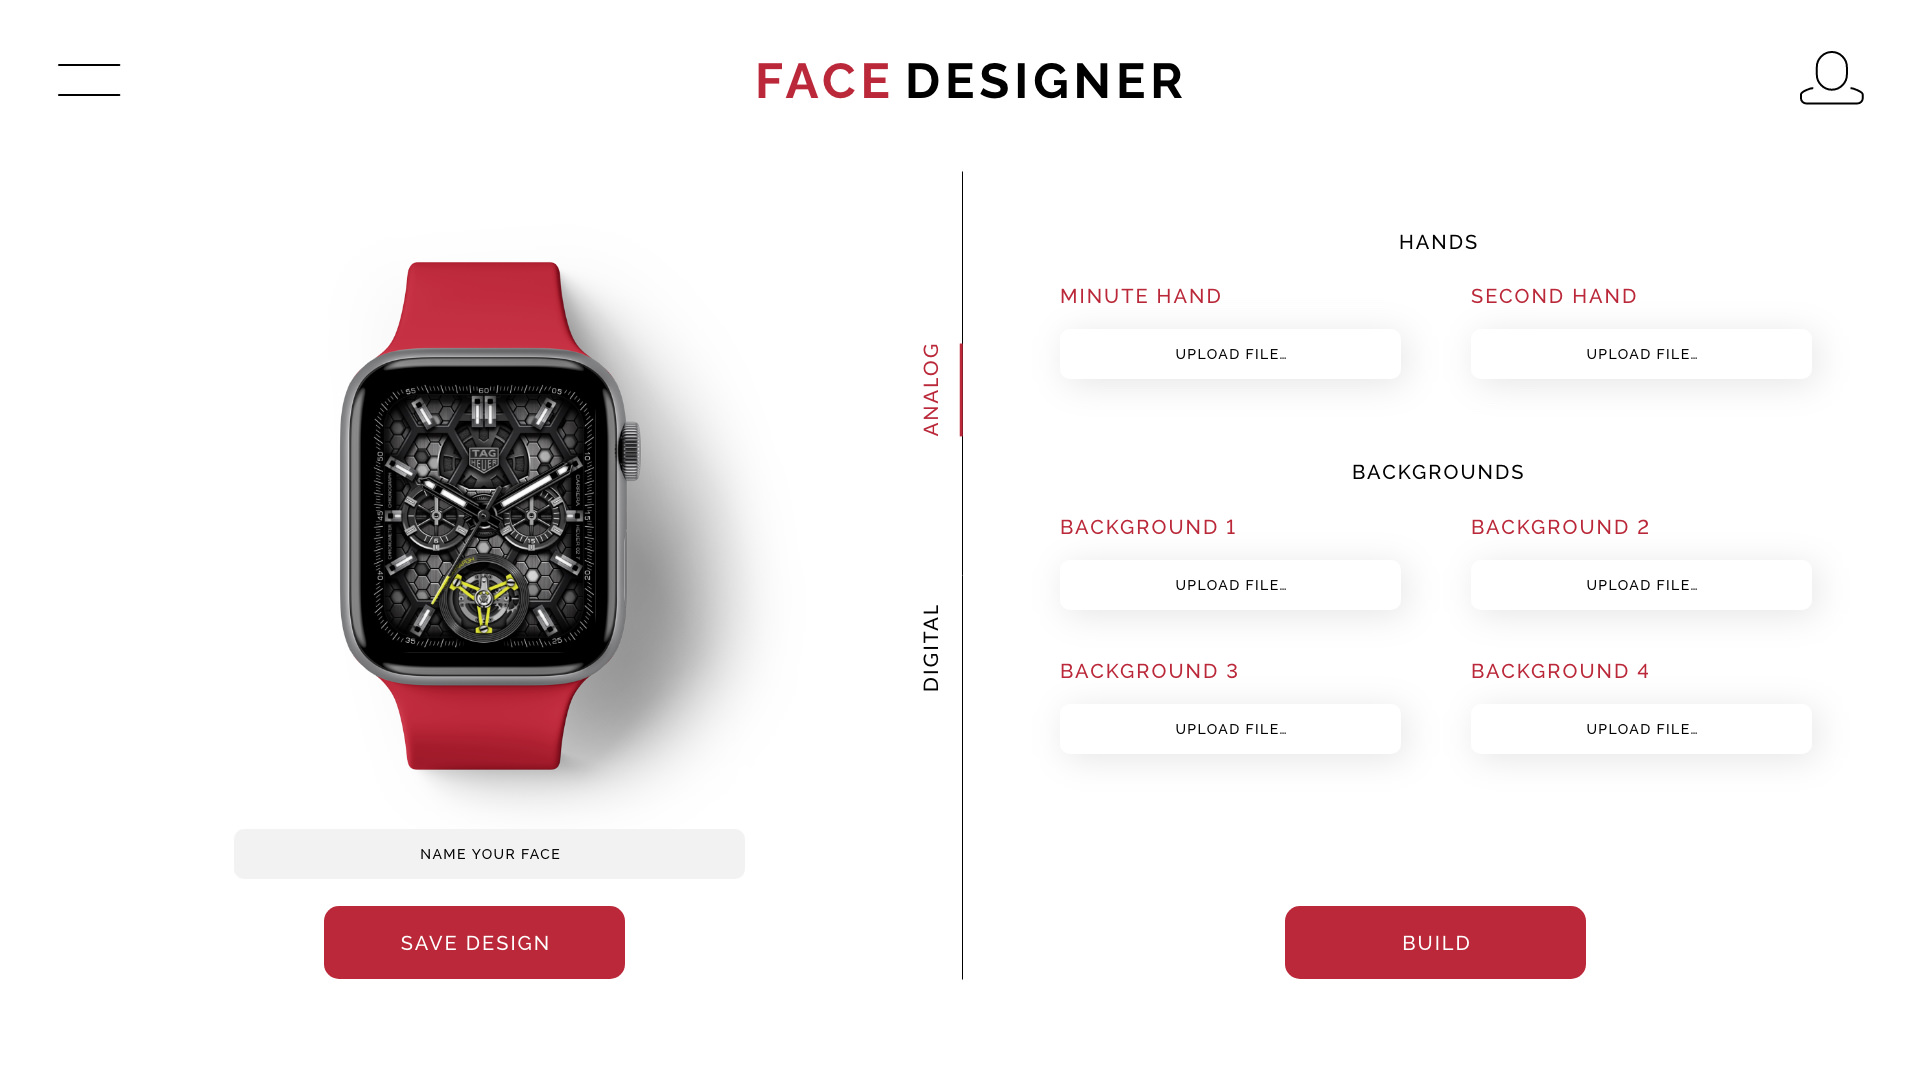 Analog Clock Designer - Apple Face Designer